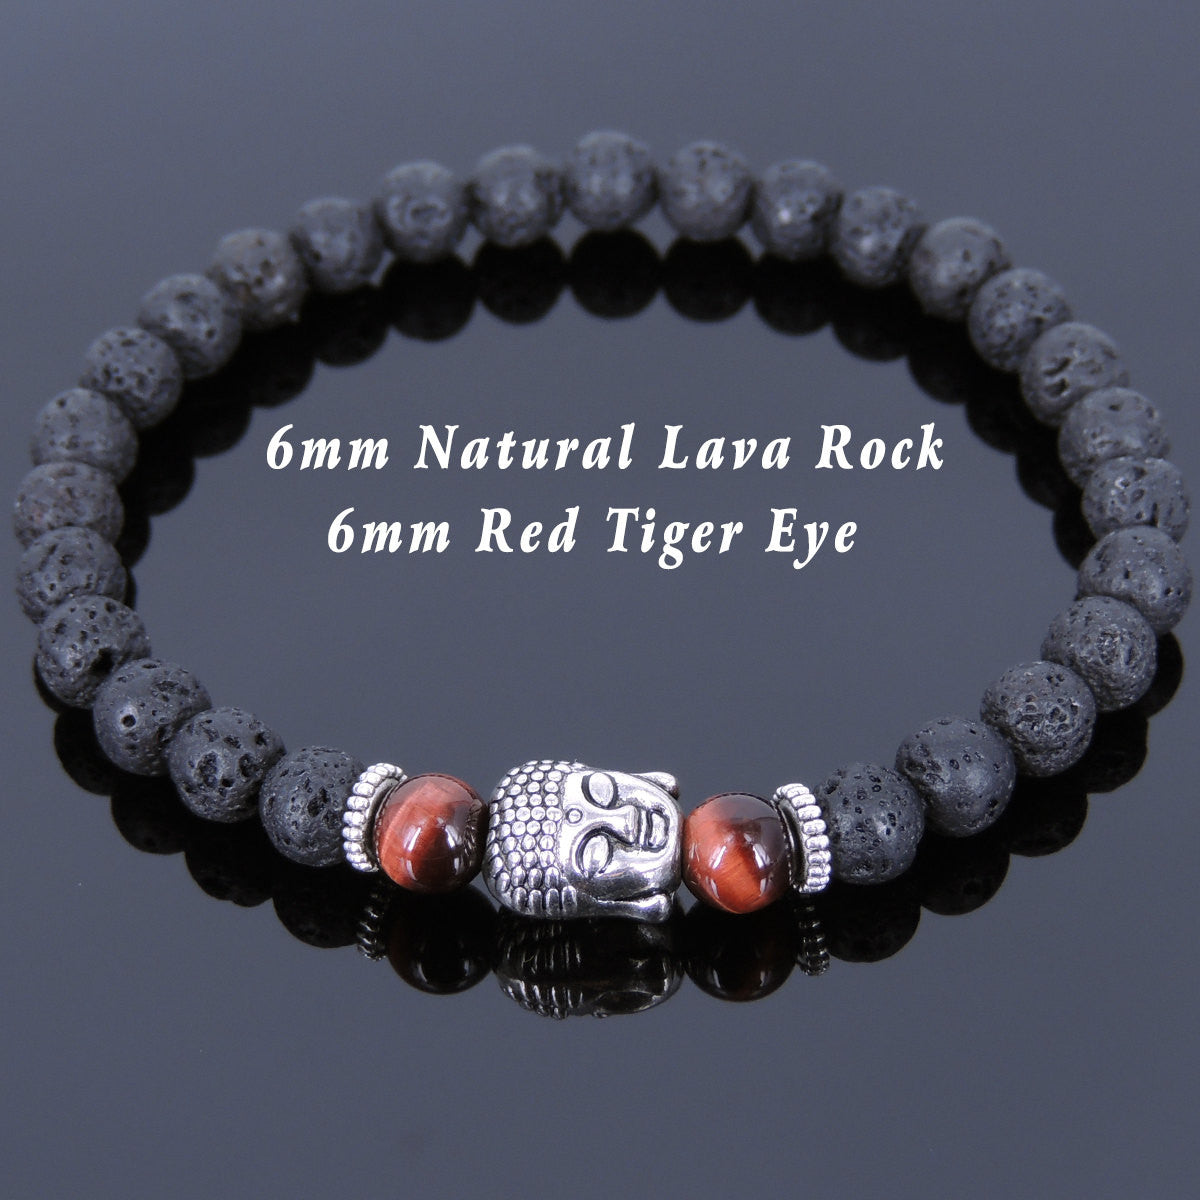 6mm Red Tiger Eye & Lava Rock Healing Gemstone Bracelet with Tibetan Silver Sakyamuni Buddha & Spacers - Handmade by Gem & Silver TSB119